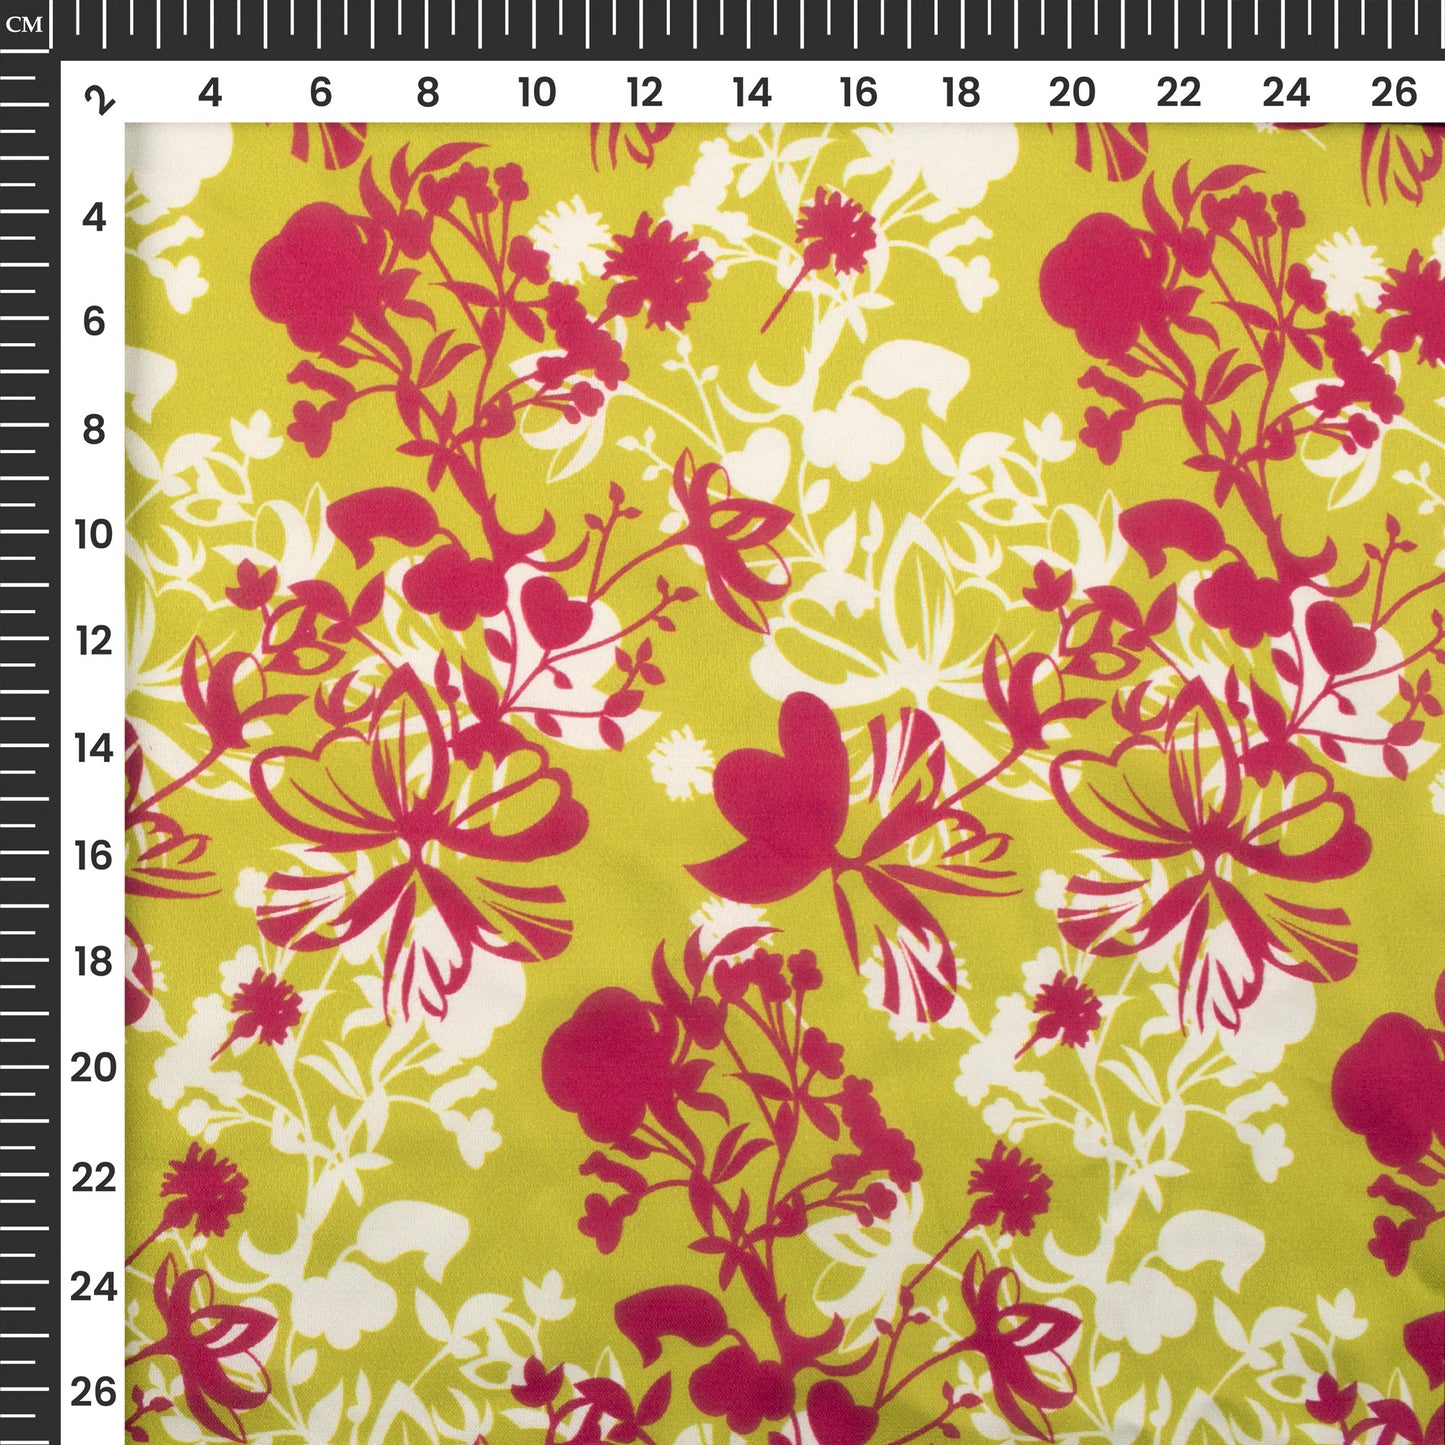 Exclusive Edition: Floral Digital Print Modal Satin Fabric